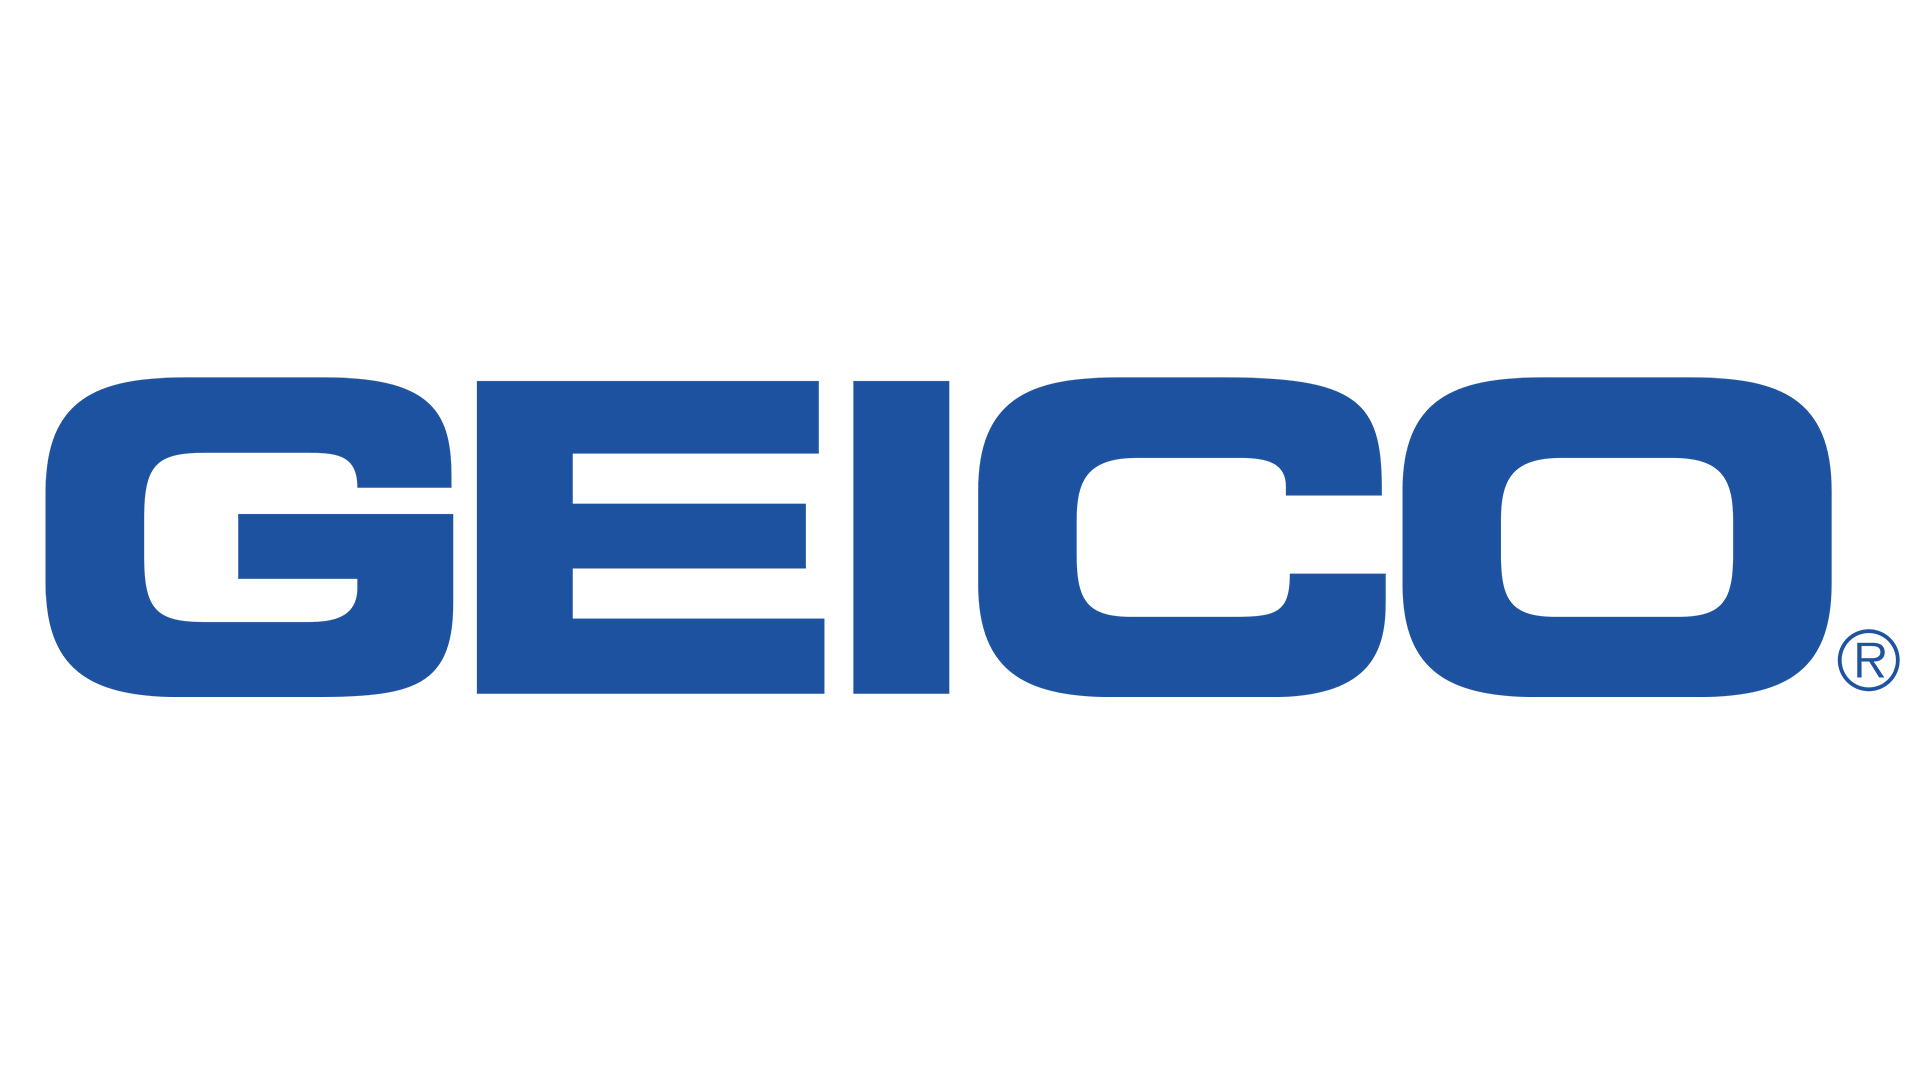 Geico Car Insurance Company